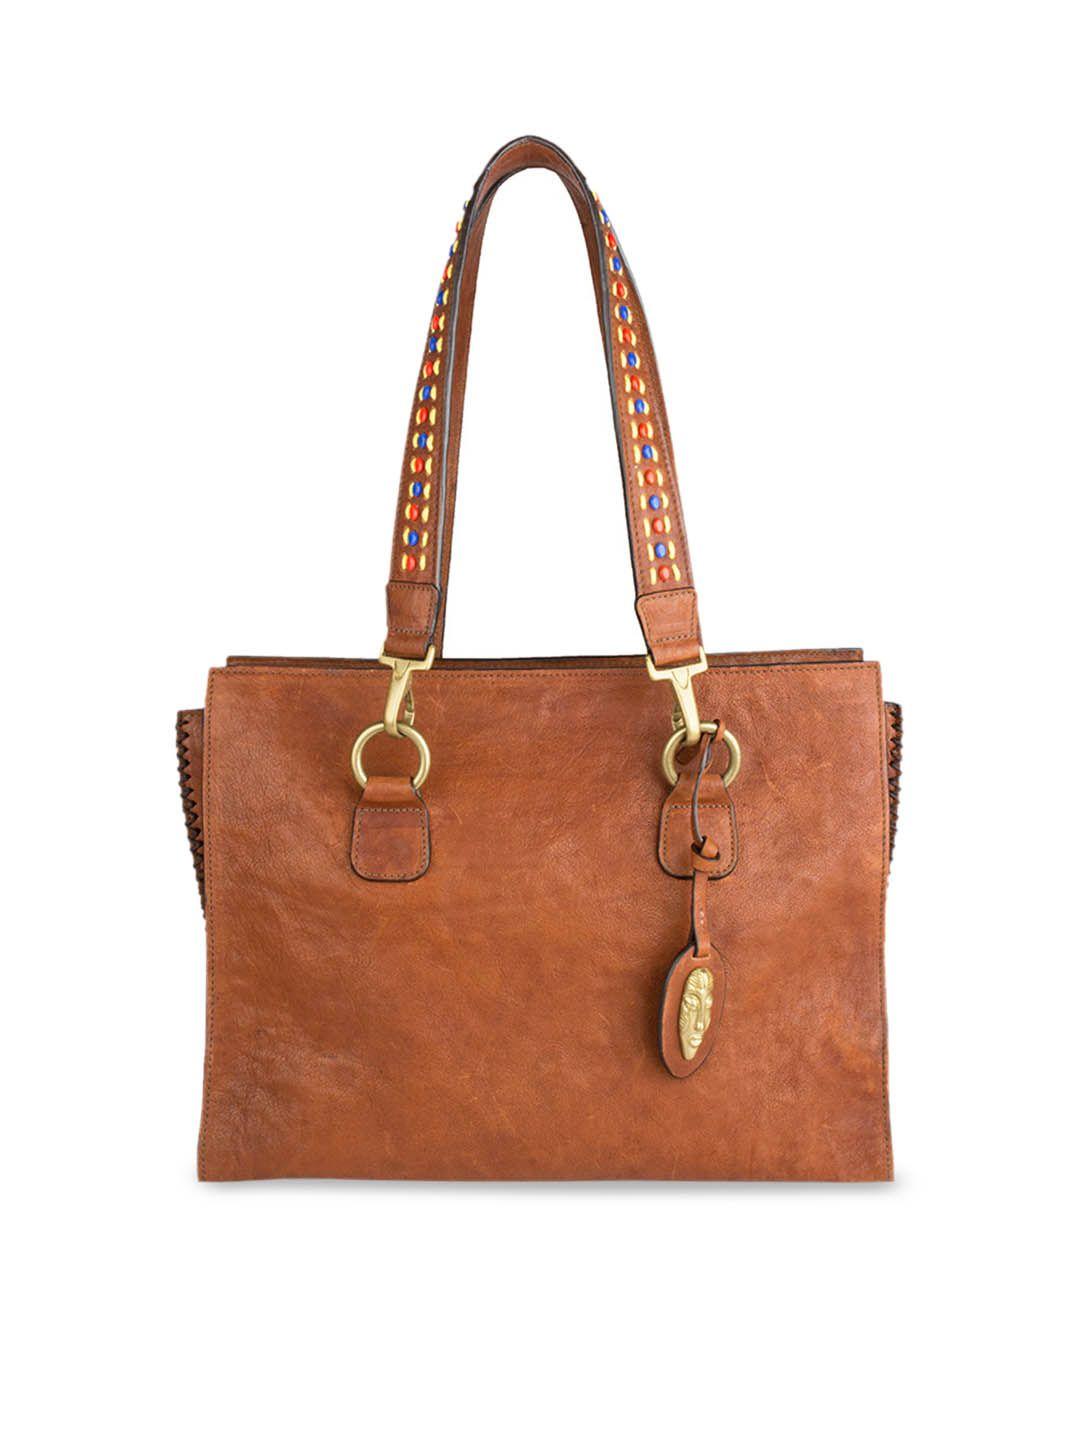 hidesign tan brown solid leather handheld bag